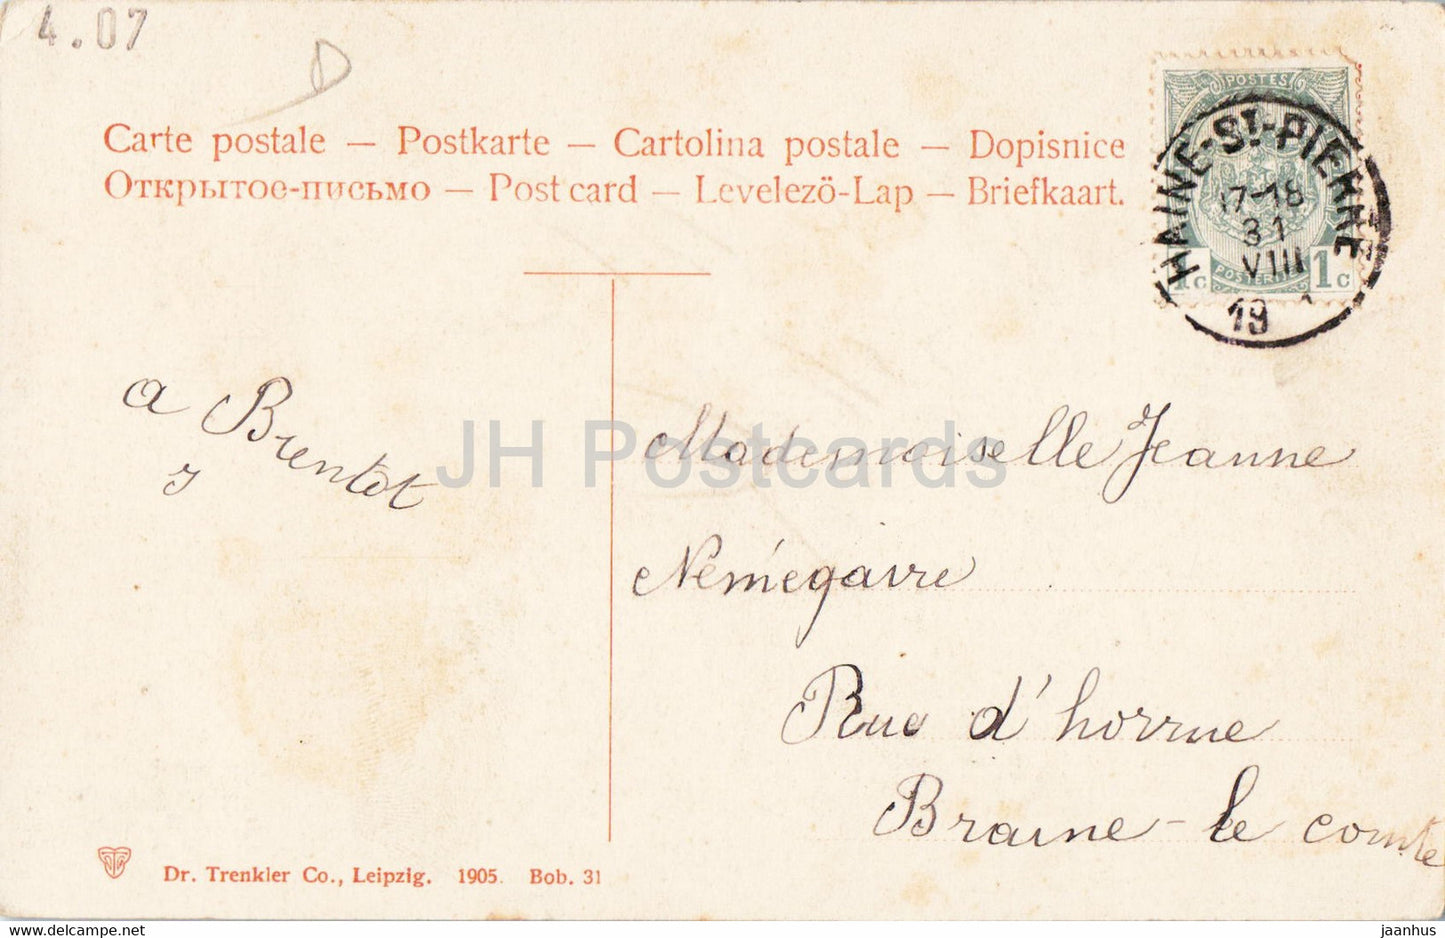 Blausee - Felsenzimmer - 1905 - old postcard - Switzerland - used